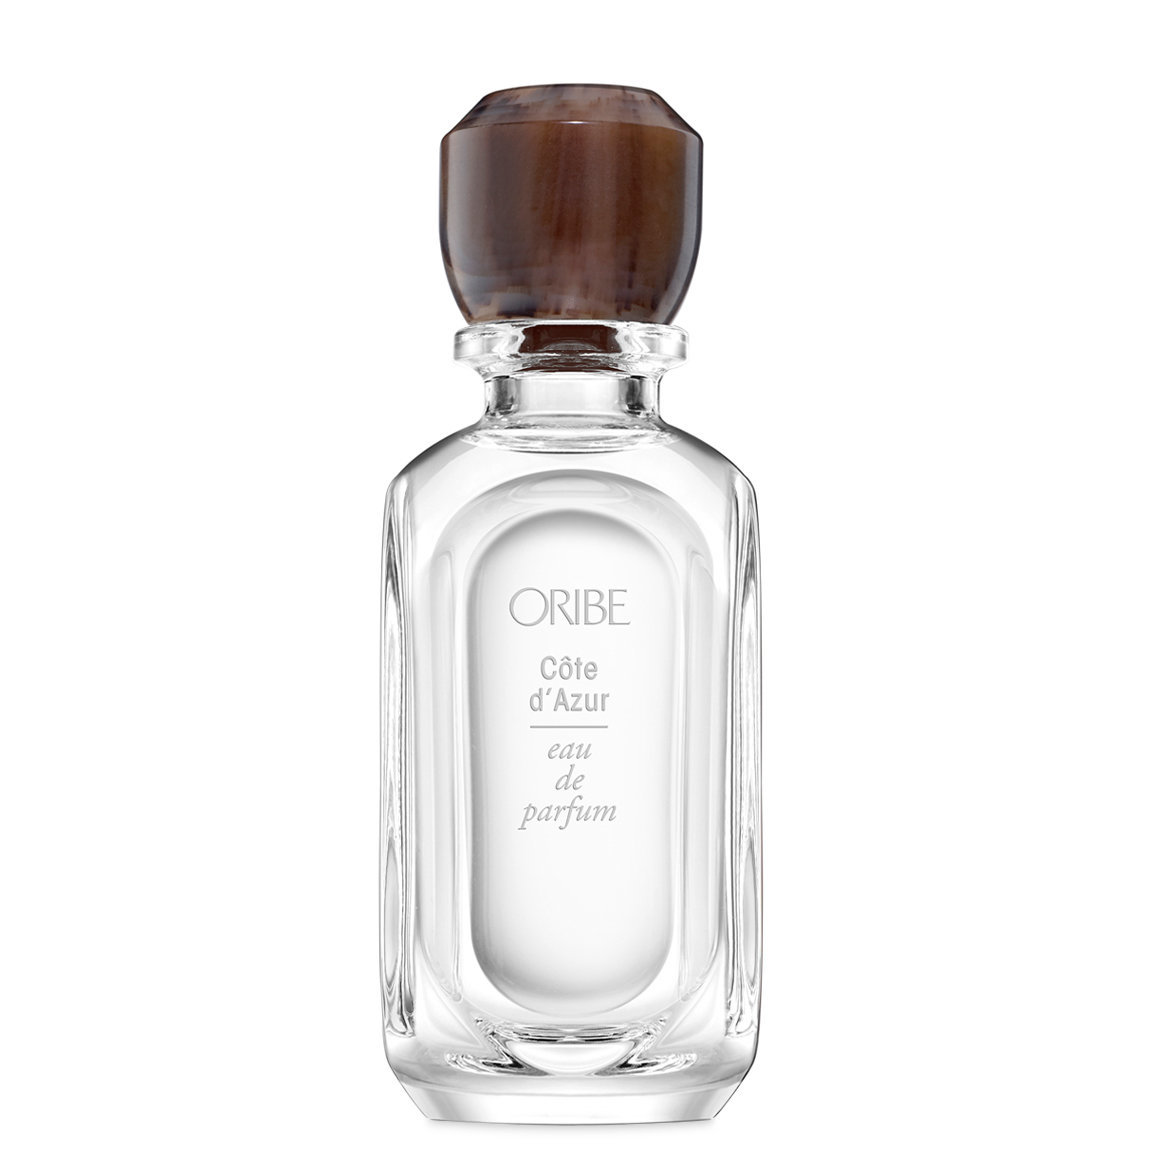 Oribe Côte d'Azur 75 ml alternative view 1 - product swatch.